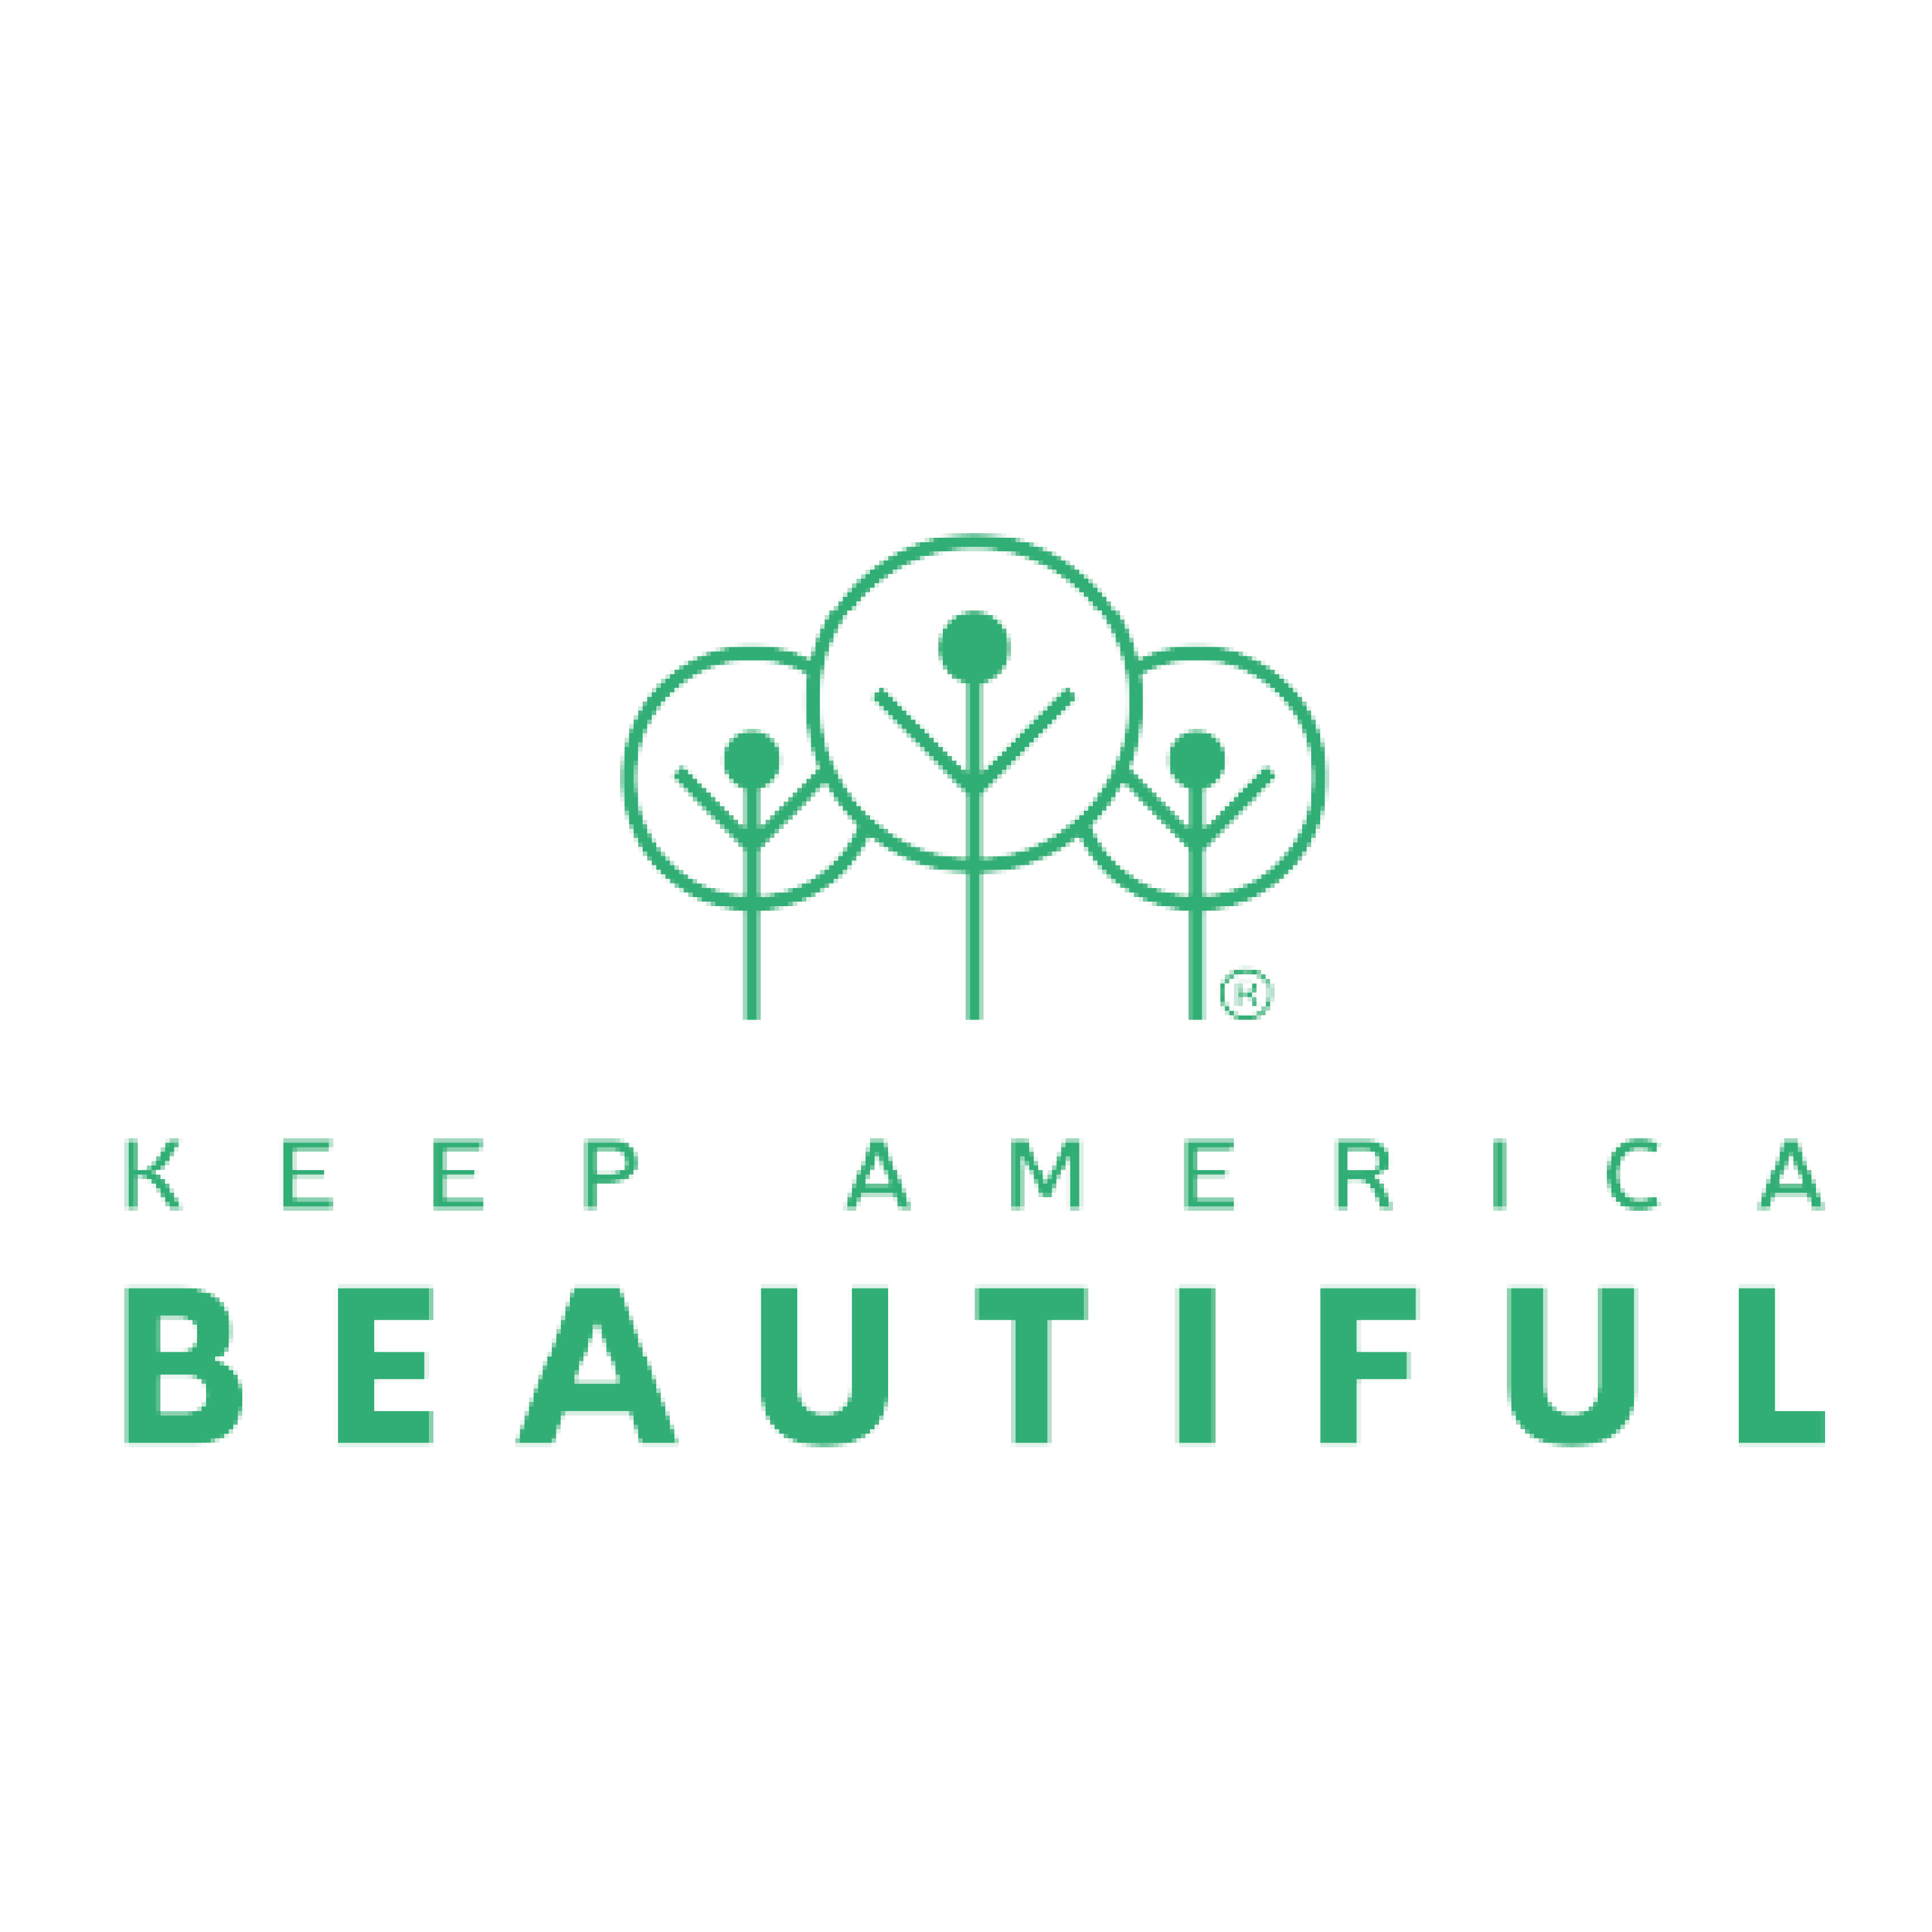 Green letters saying Keep America Beautiful